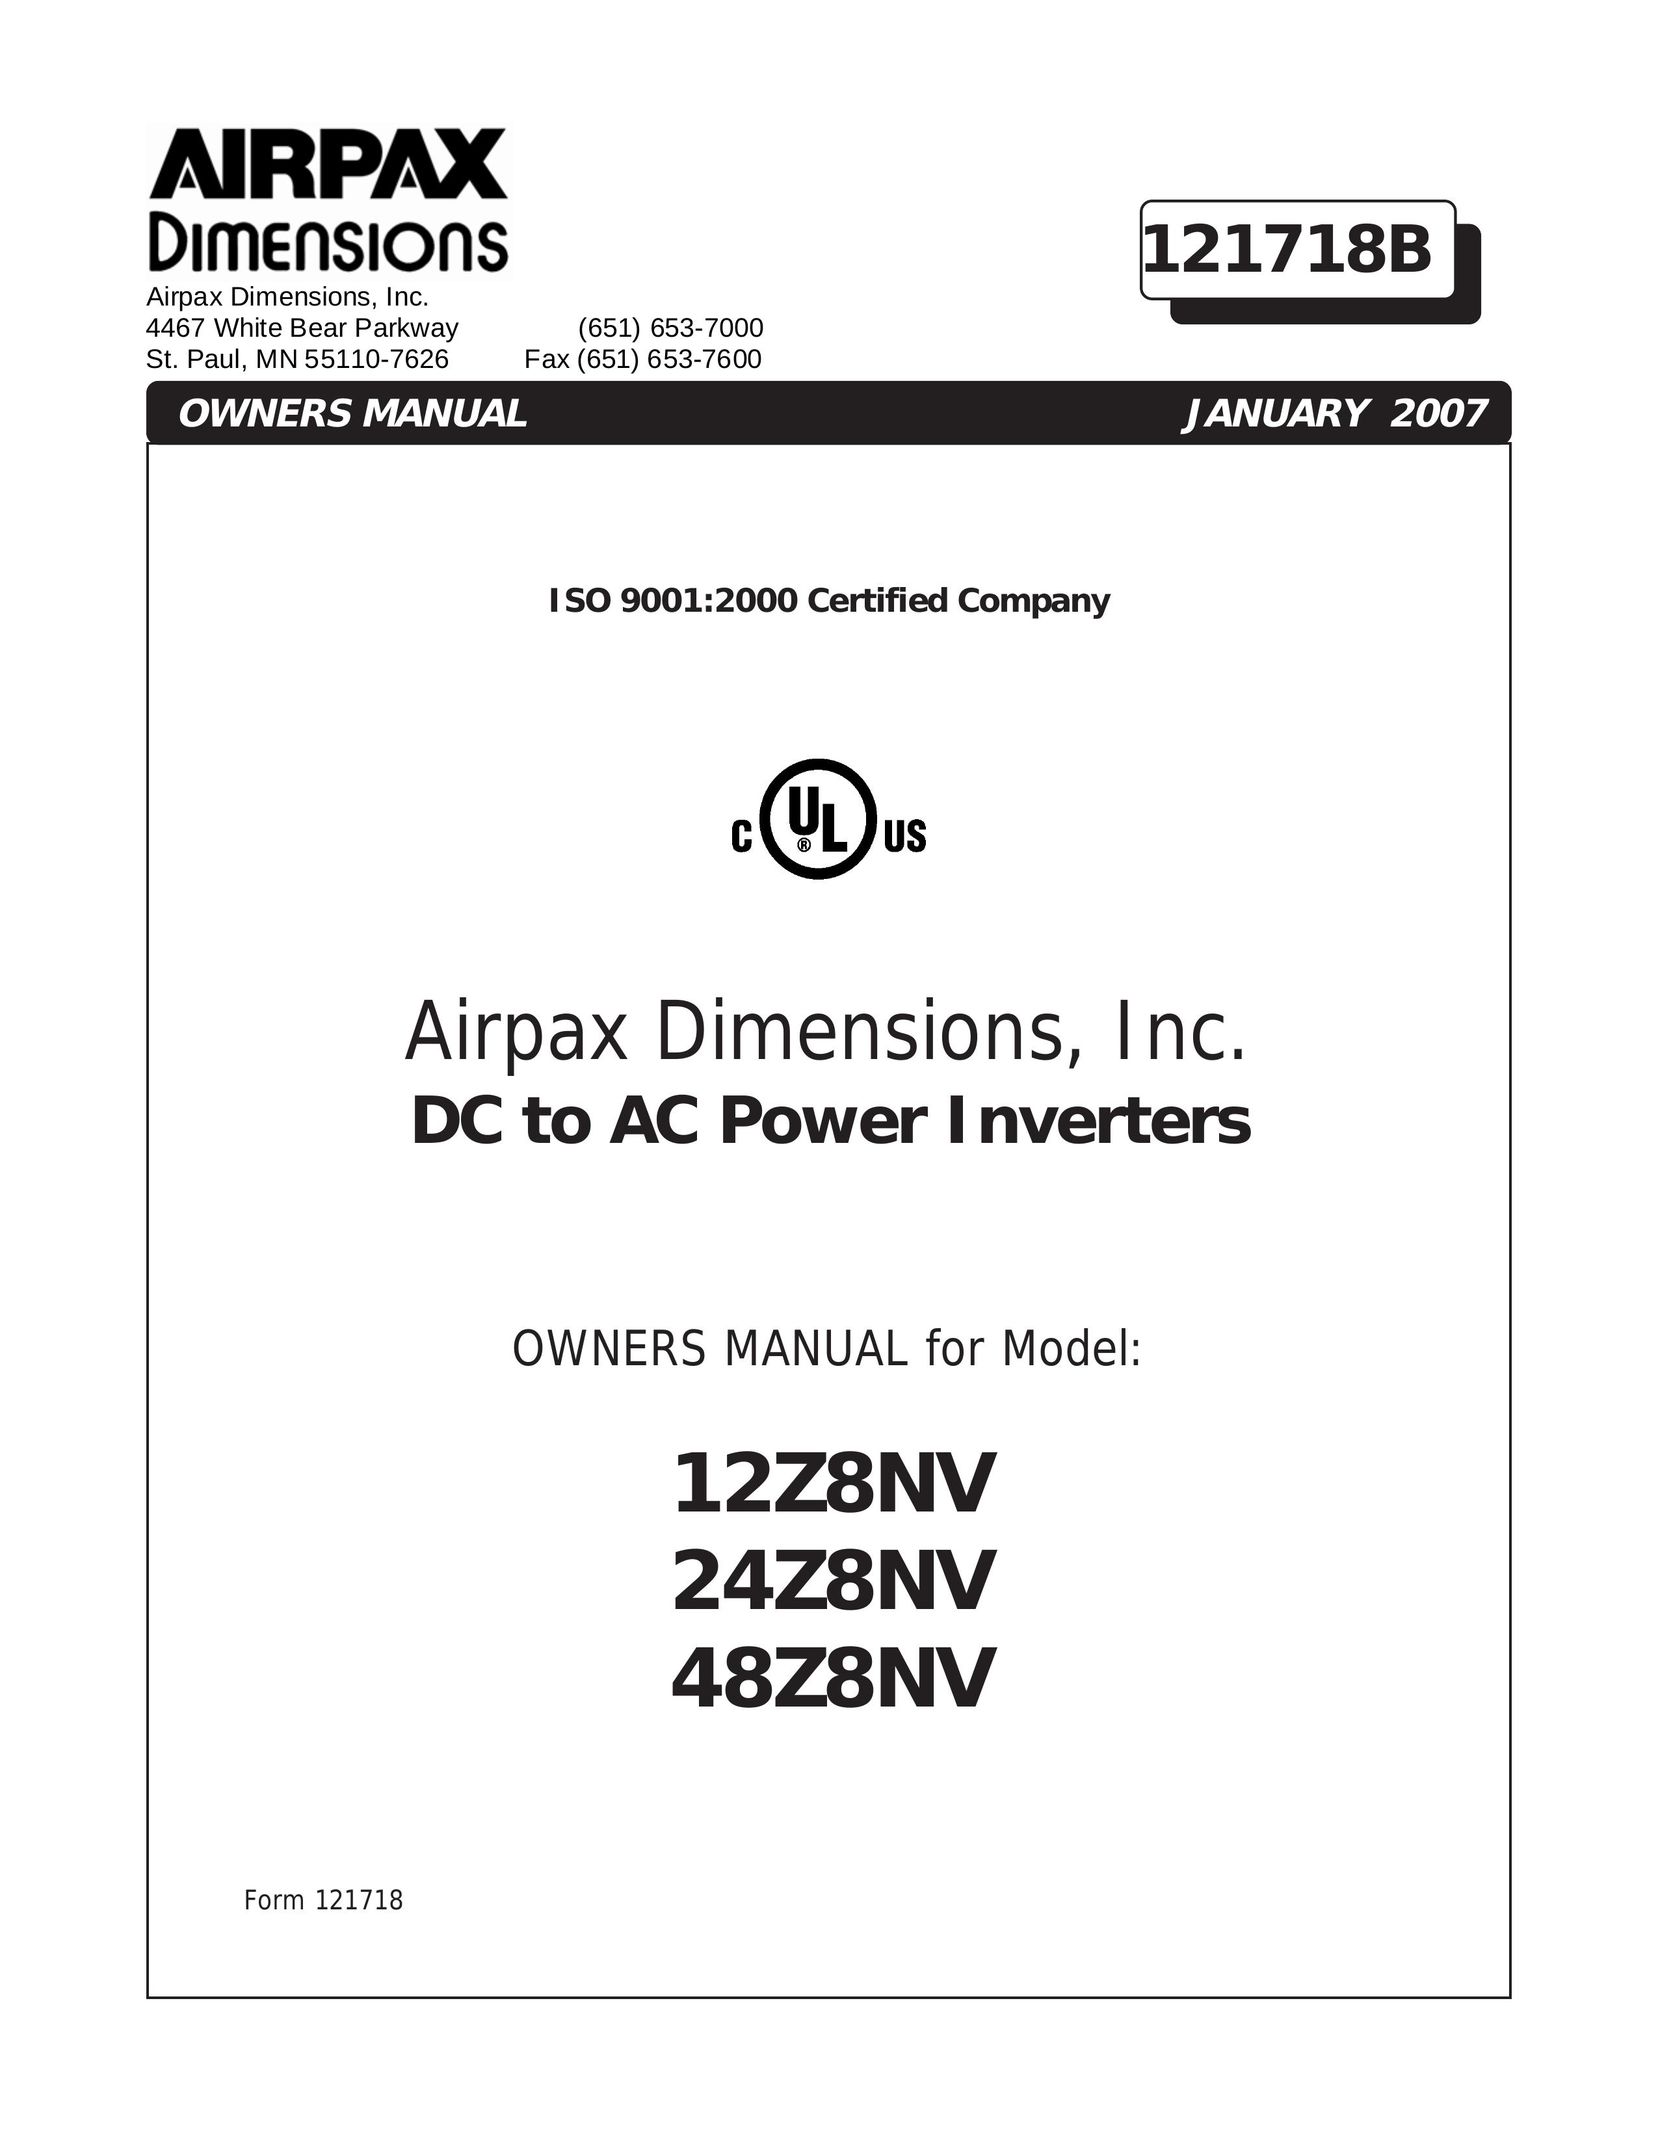 Certified International 24Z8NV Welding System User Manual